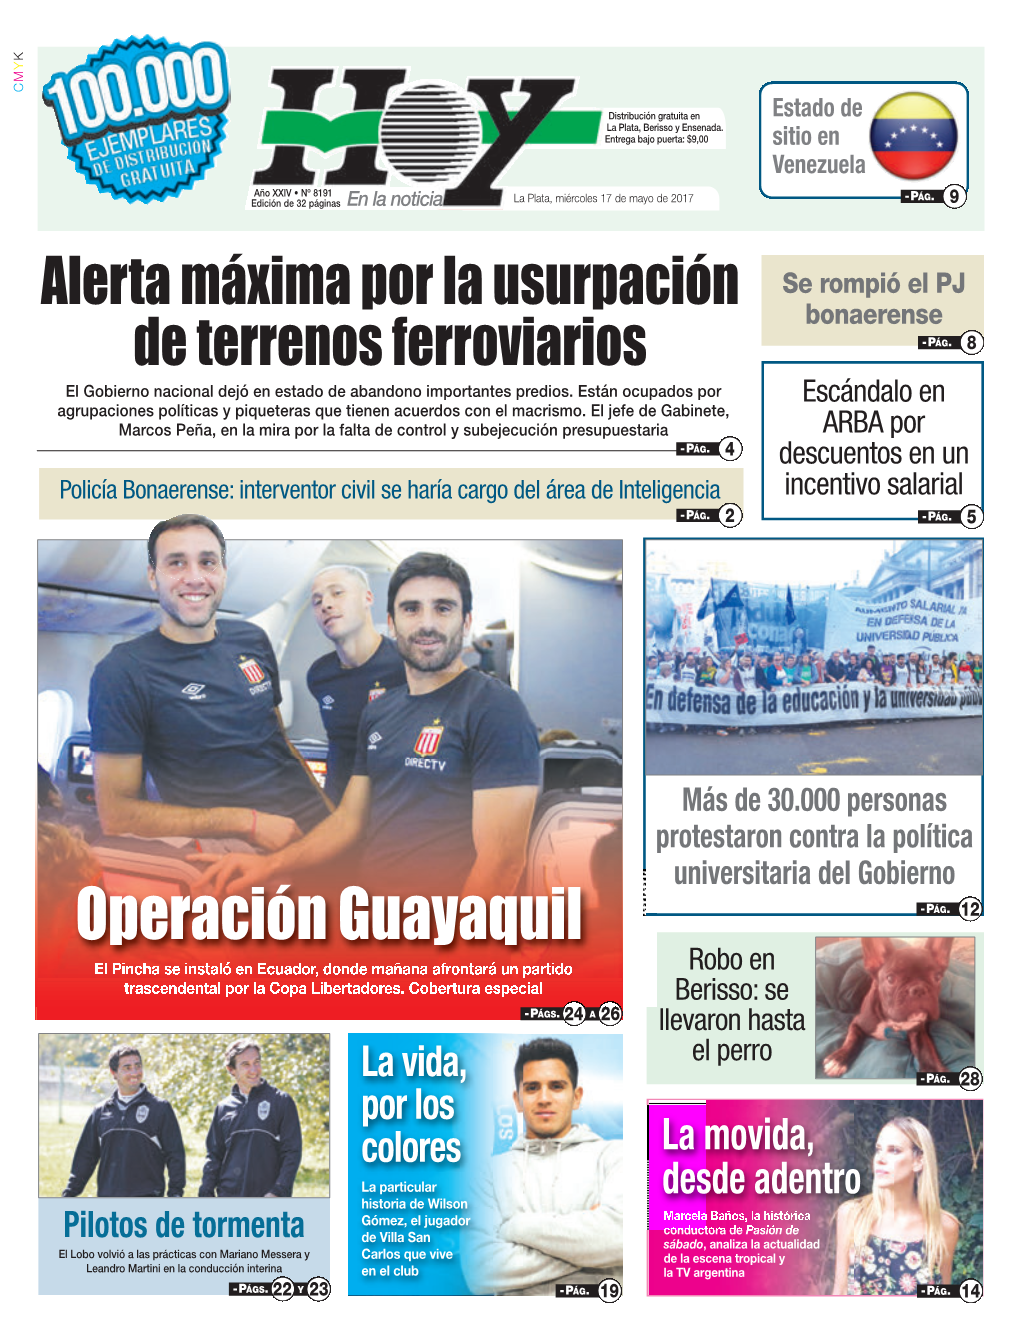 Operación Guayaquil